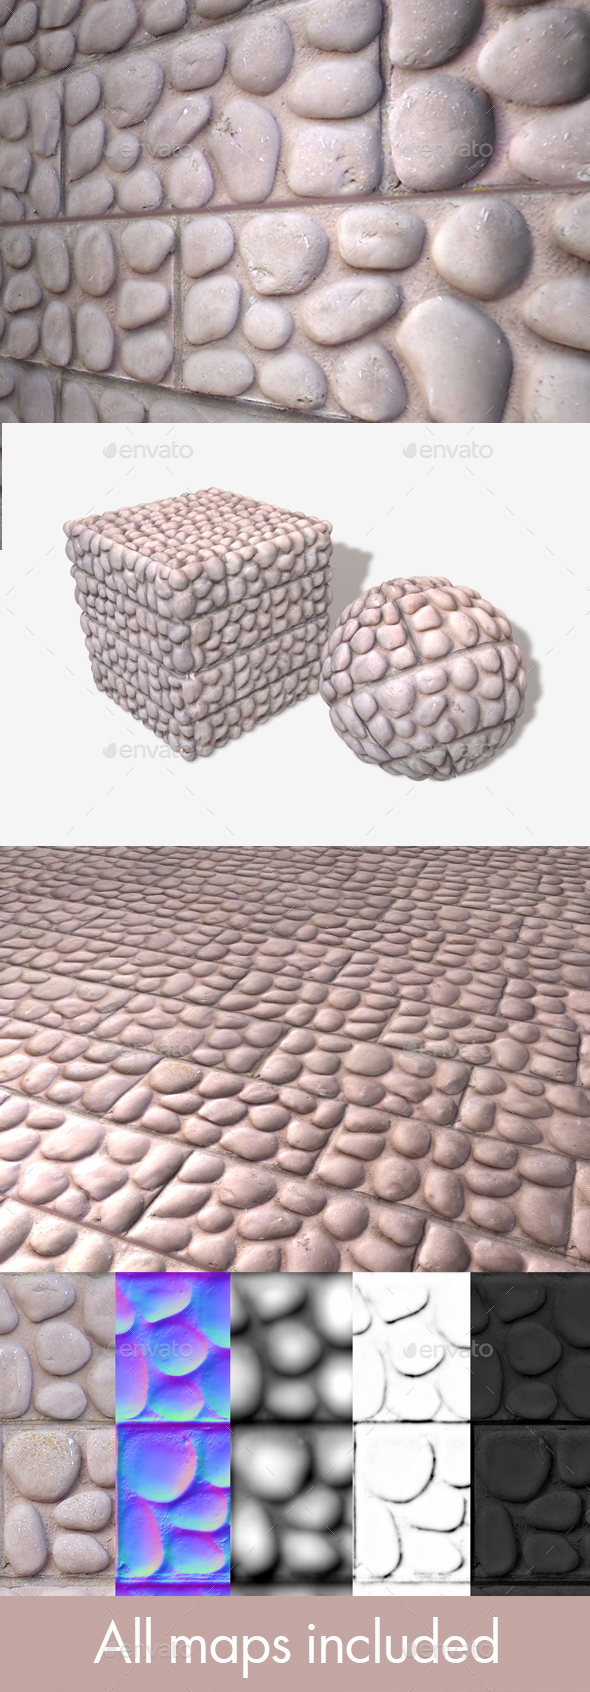 Moulded Stone Bricks - 3Docean 15568634